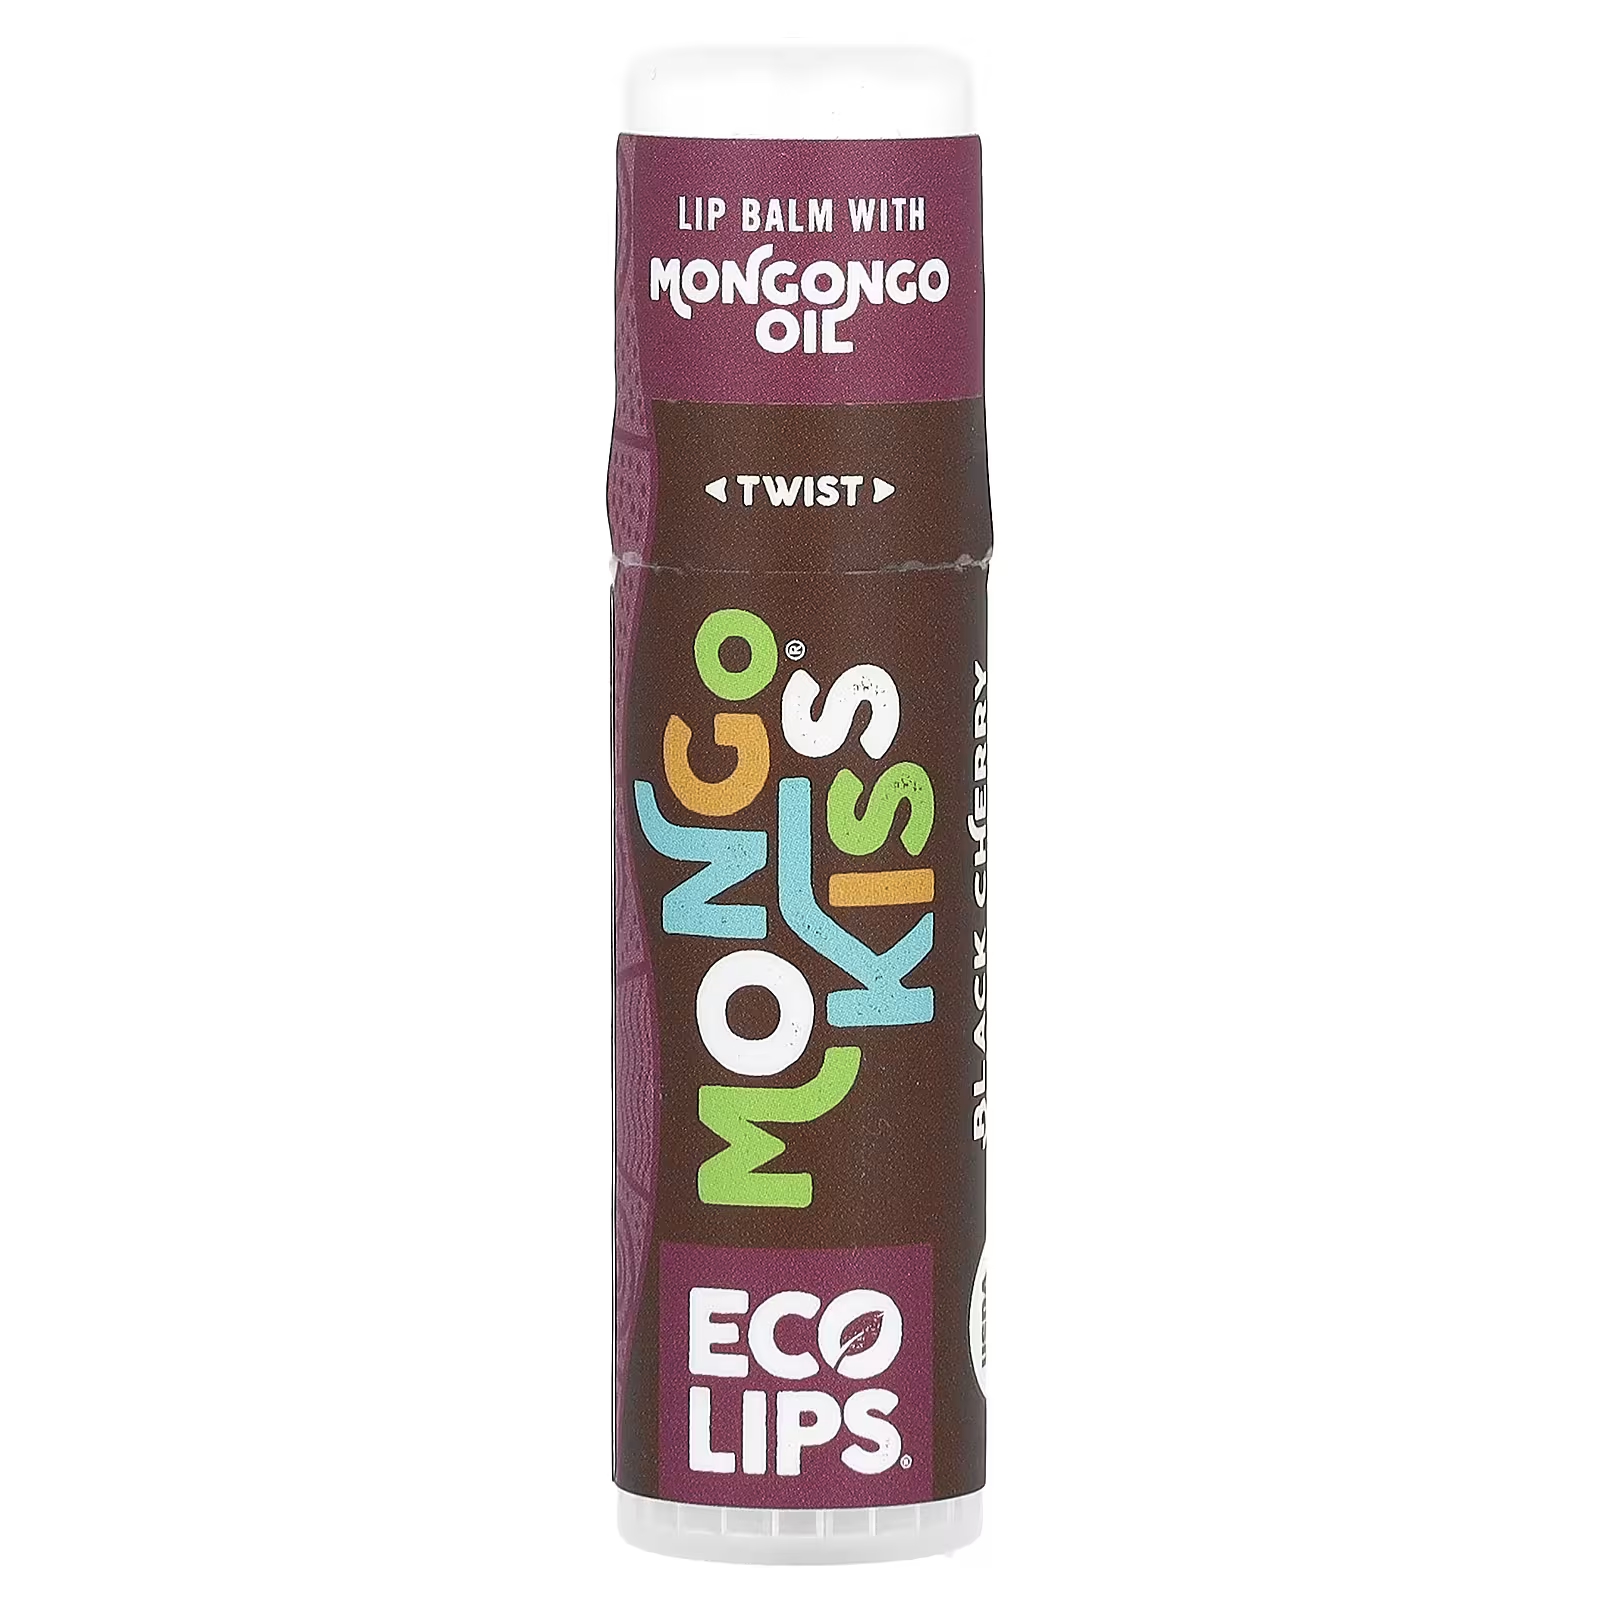 Бальзам для губ Eco Lips Inc. Mongo Kiss черная вишня, 7 г palmer s бальзам для губ формула масла какао spf15 ухаживающий бальзам для губ шоколад 4 г